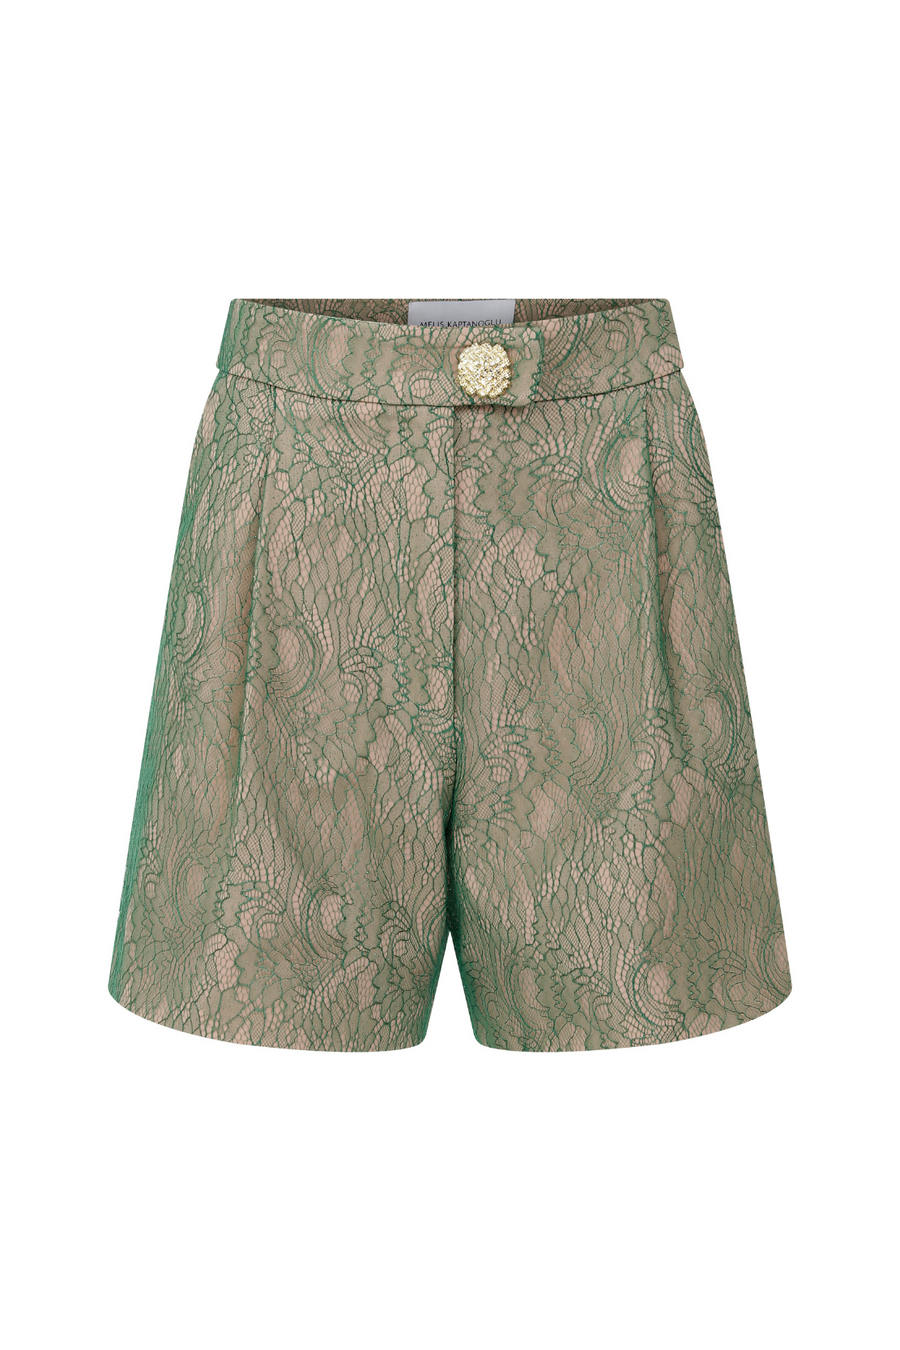 Emerald Lace Shorts